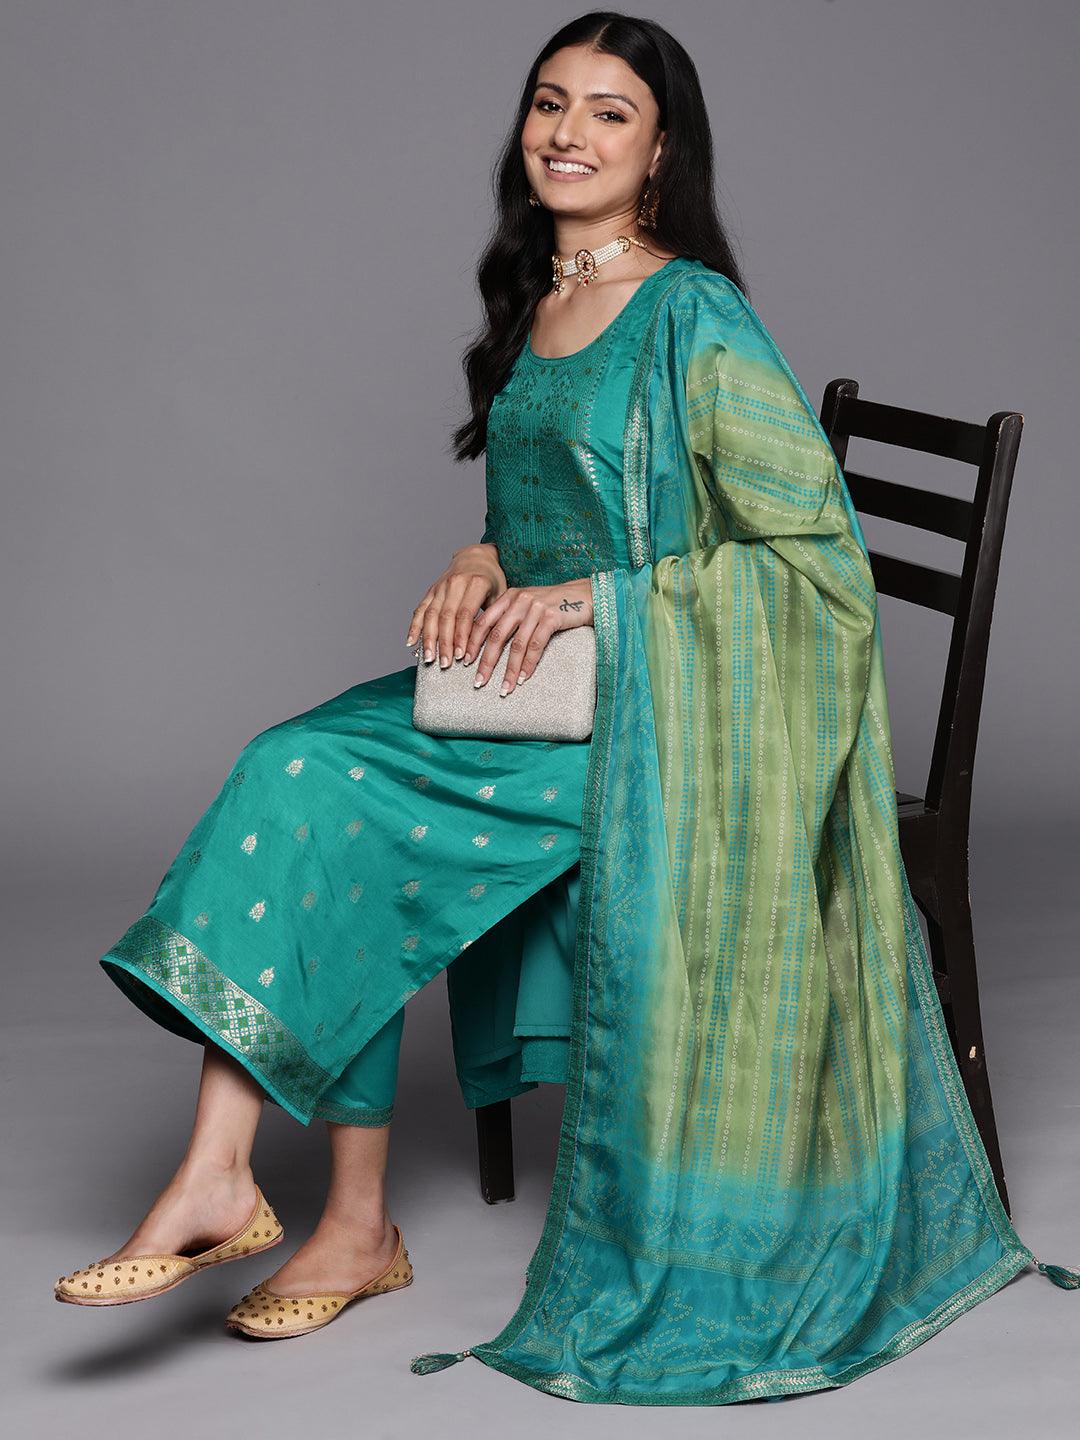 New Designer Indian Traditional Patiala Suit Women Girls Beautiful Salwar  Kameez | eBay